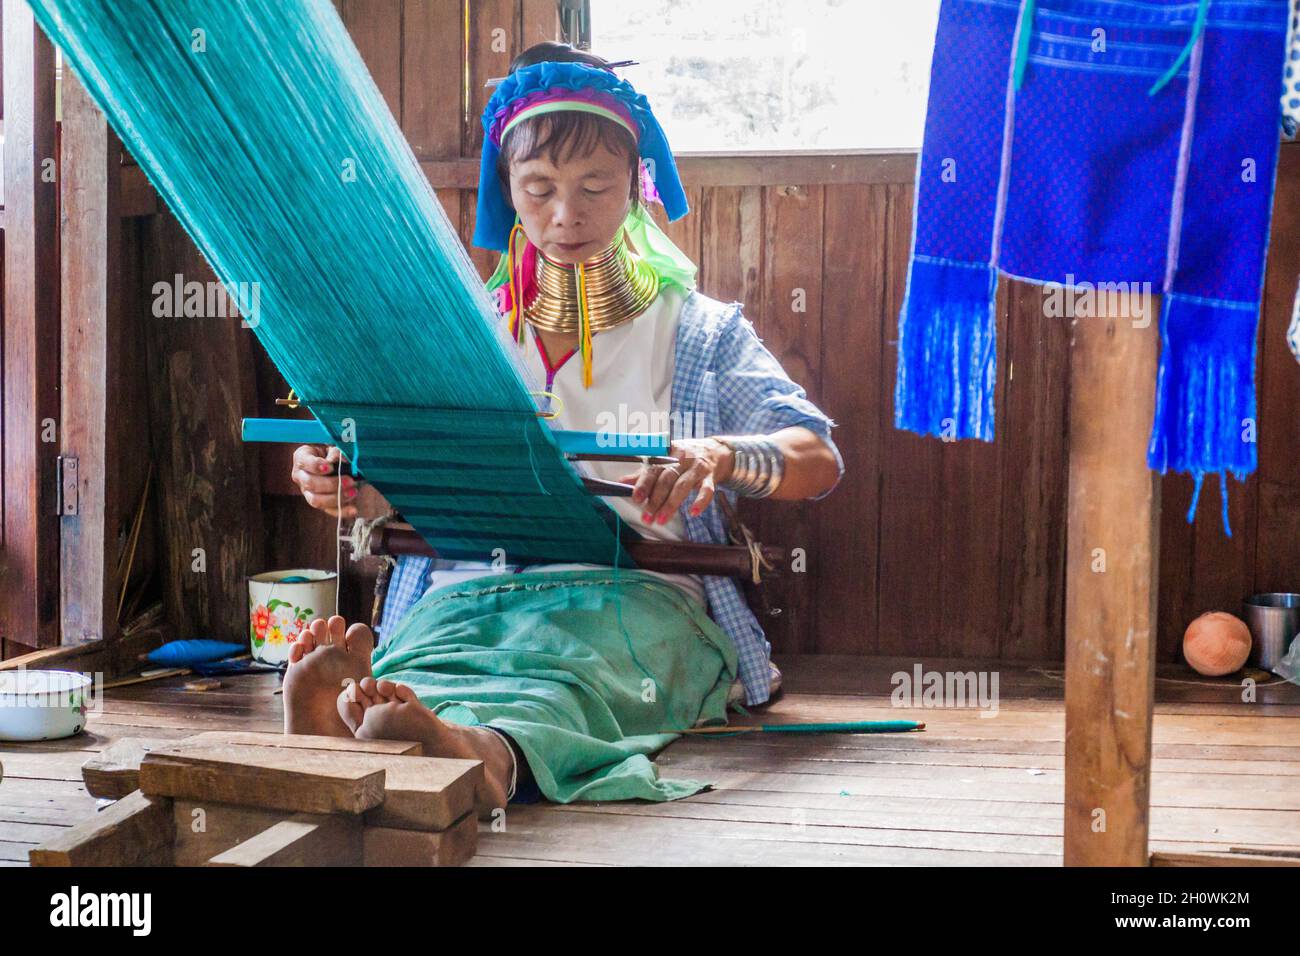 INLE, MYANMAR - NOVEMBER 28, 2016: Kayan long neck woman working in a fabric workshop at Inle lake, Myanmar Stock Photo